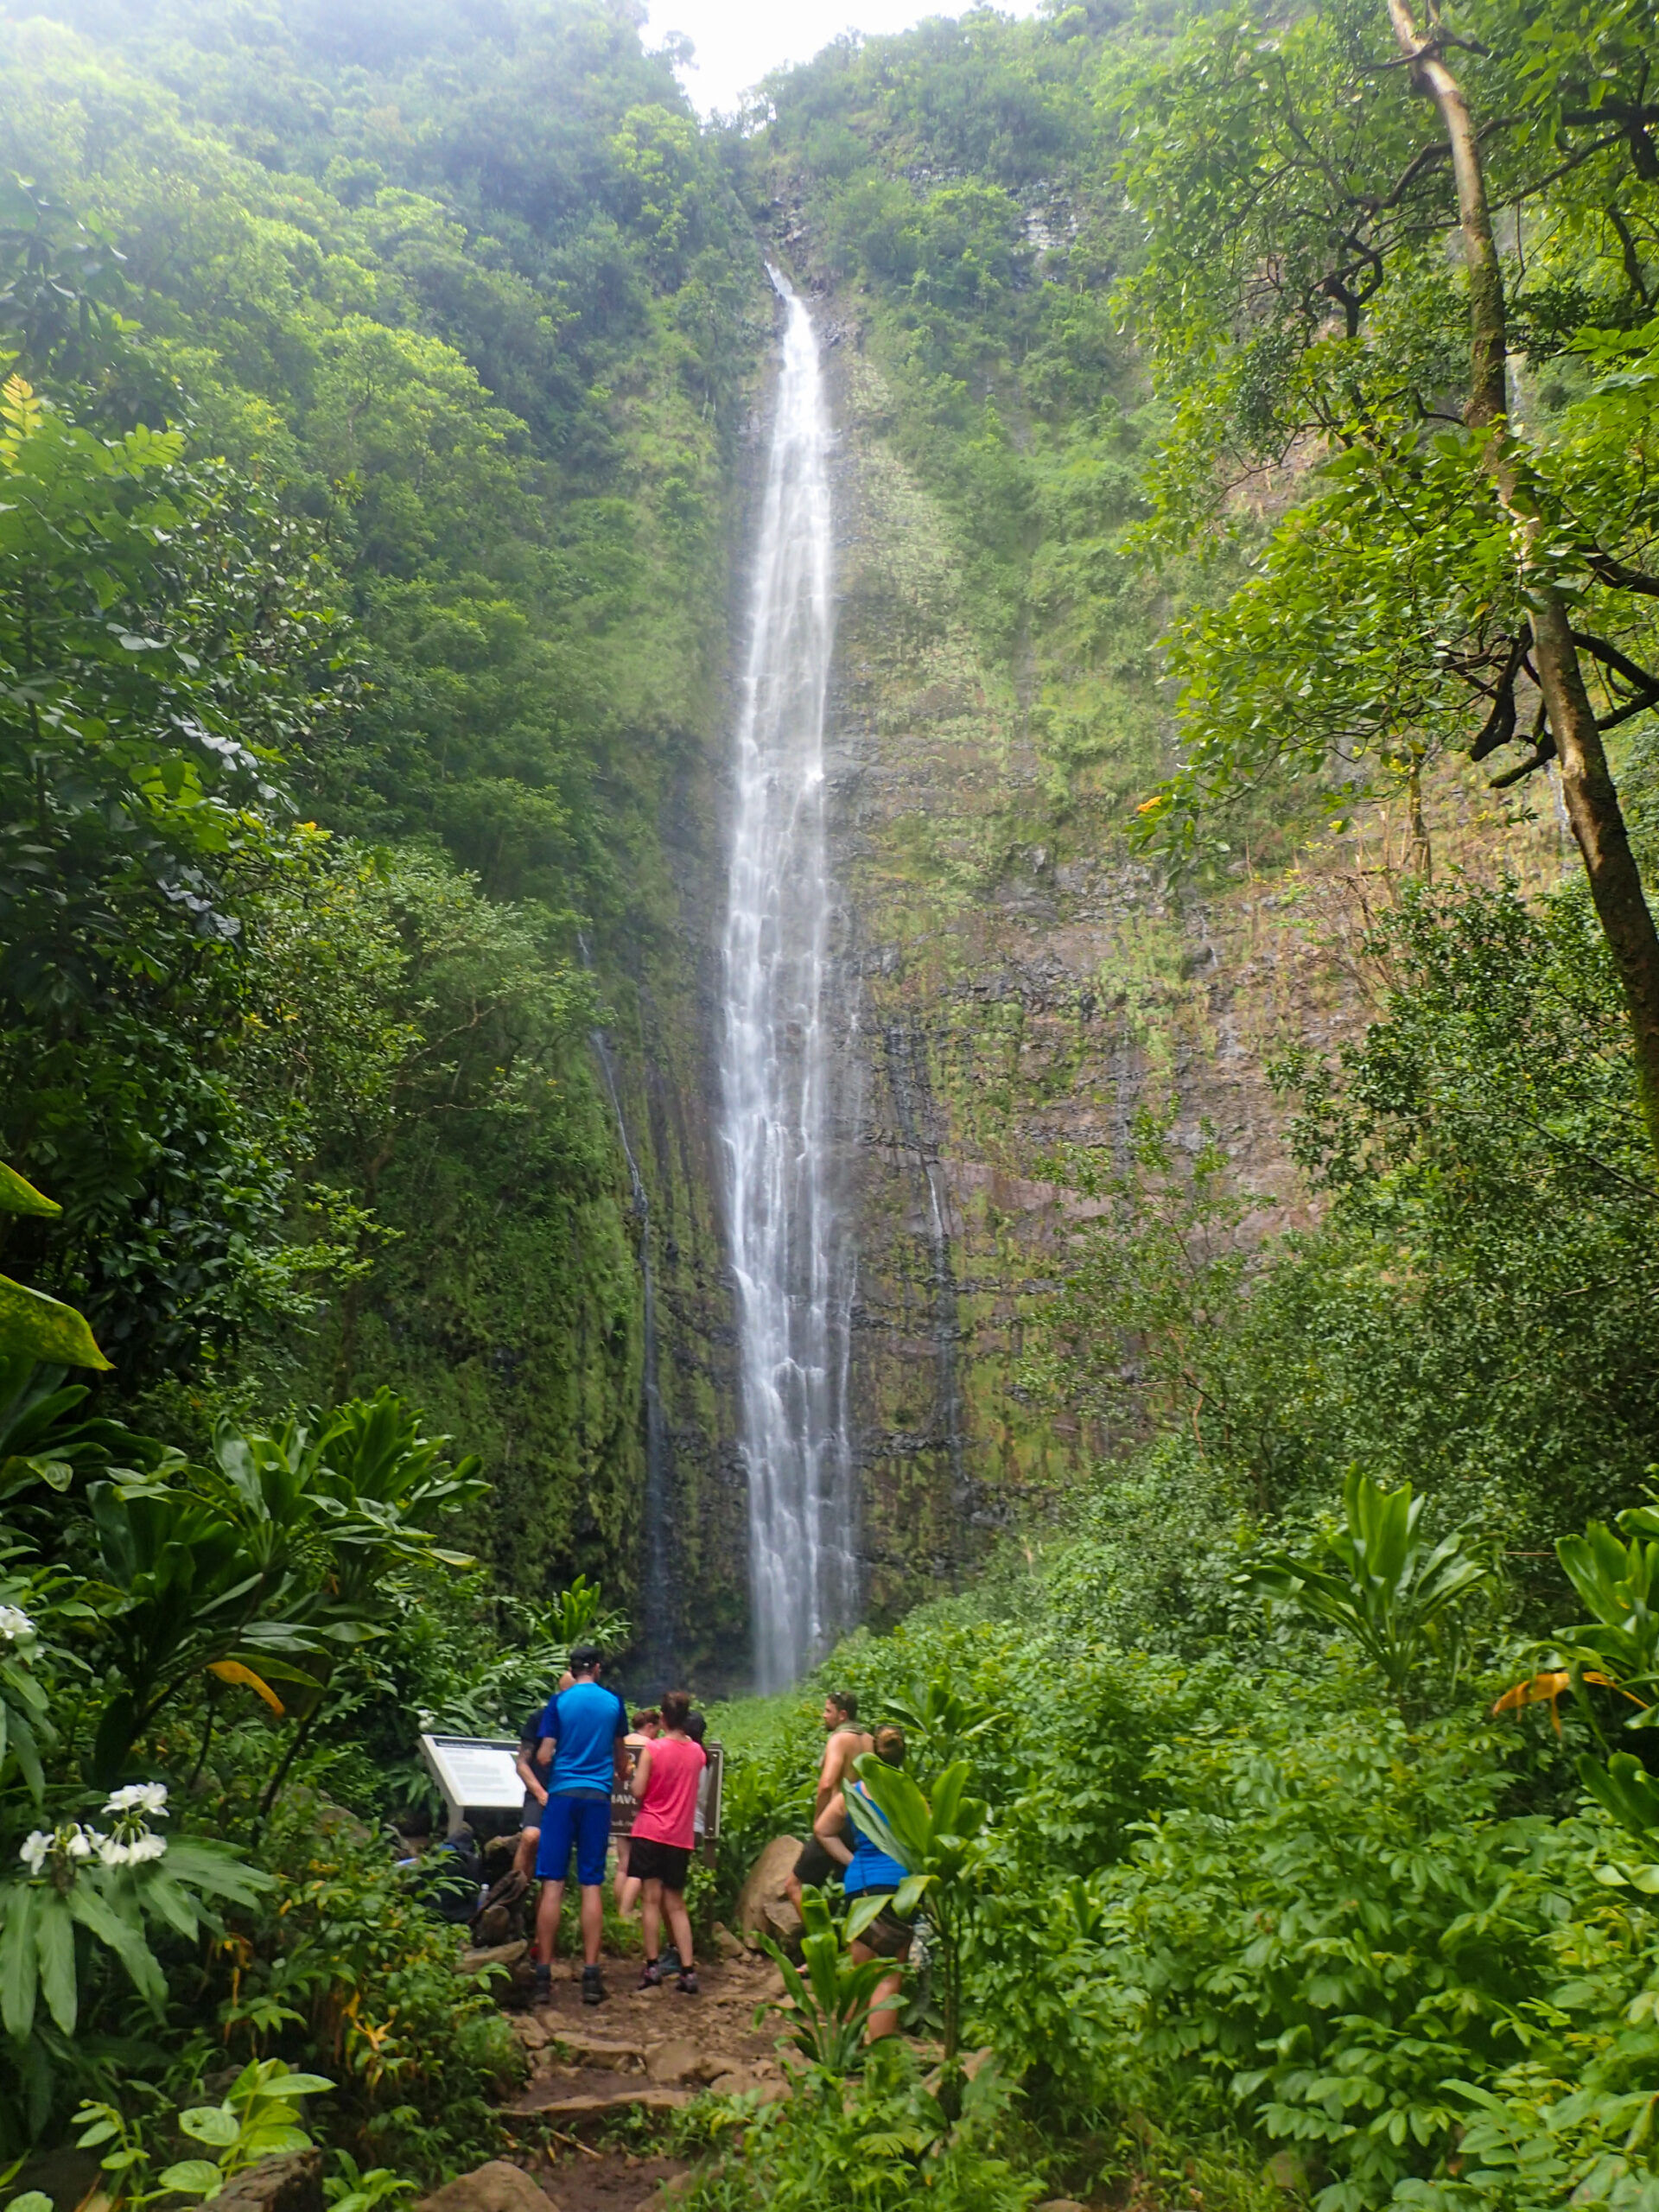 Pipiwai Trail in Maui, Hawaii